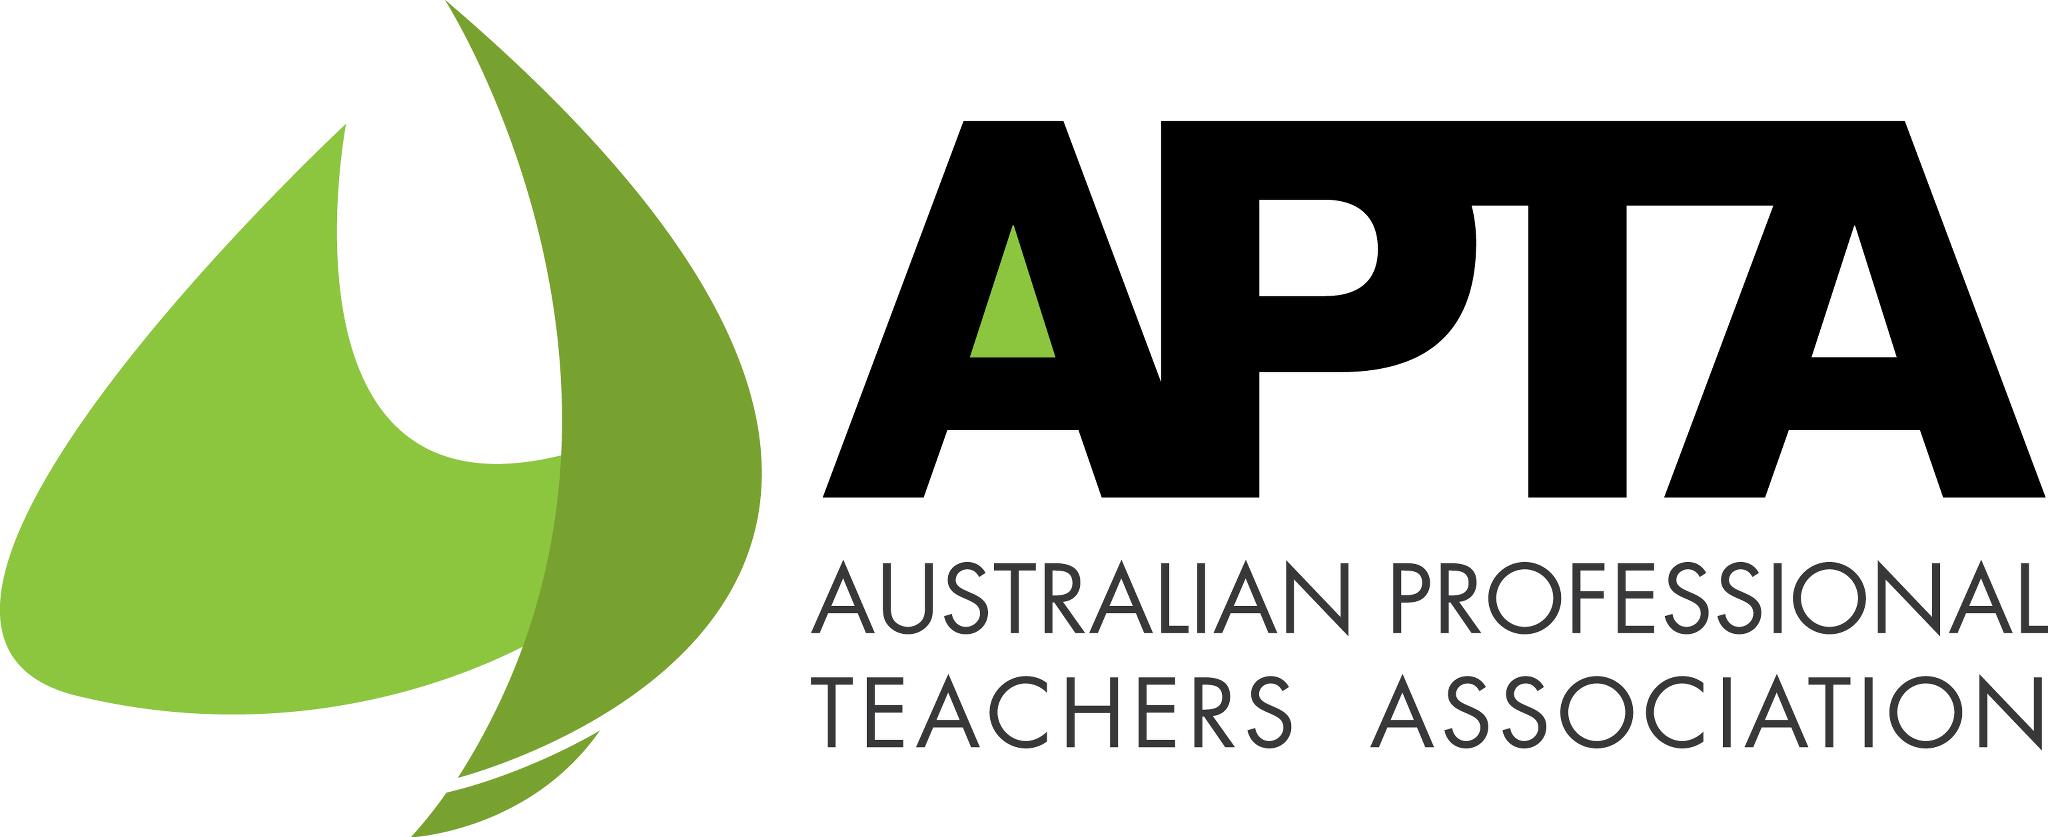 Australian Professional Teachers Association logo